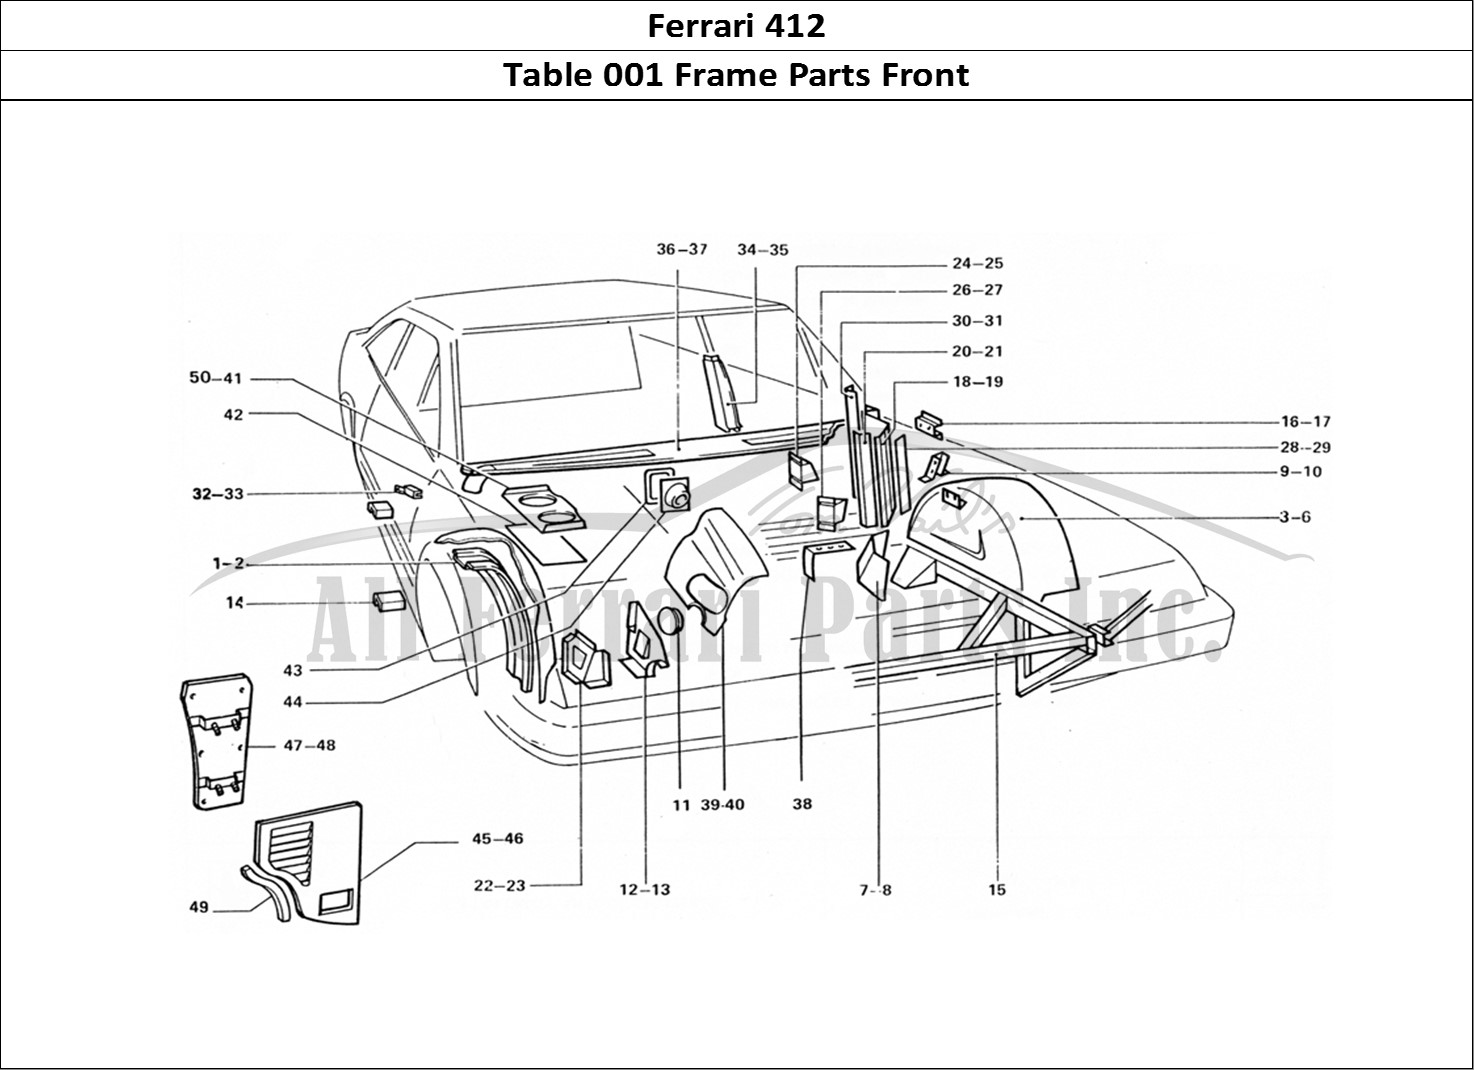 Ferrari Parts Ferrari 412 (Coachwork) Page 001 Front Inner Sheilds & Pan